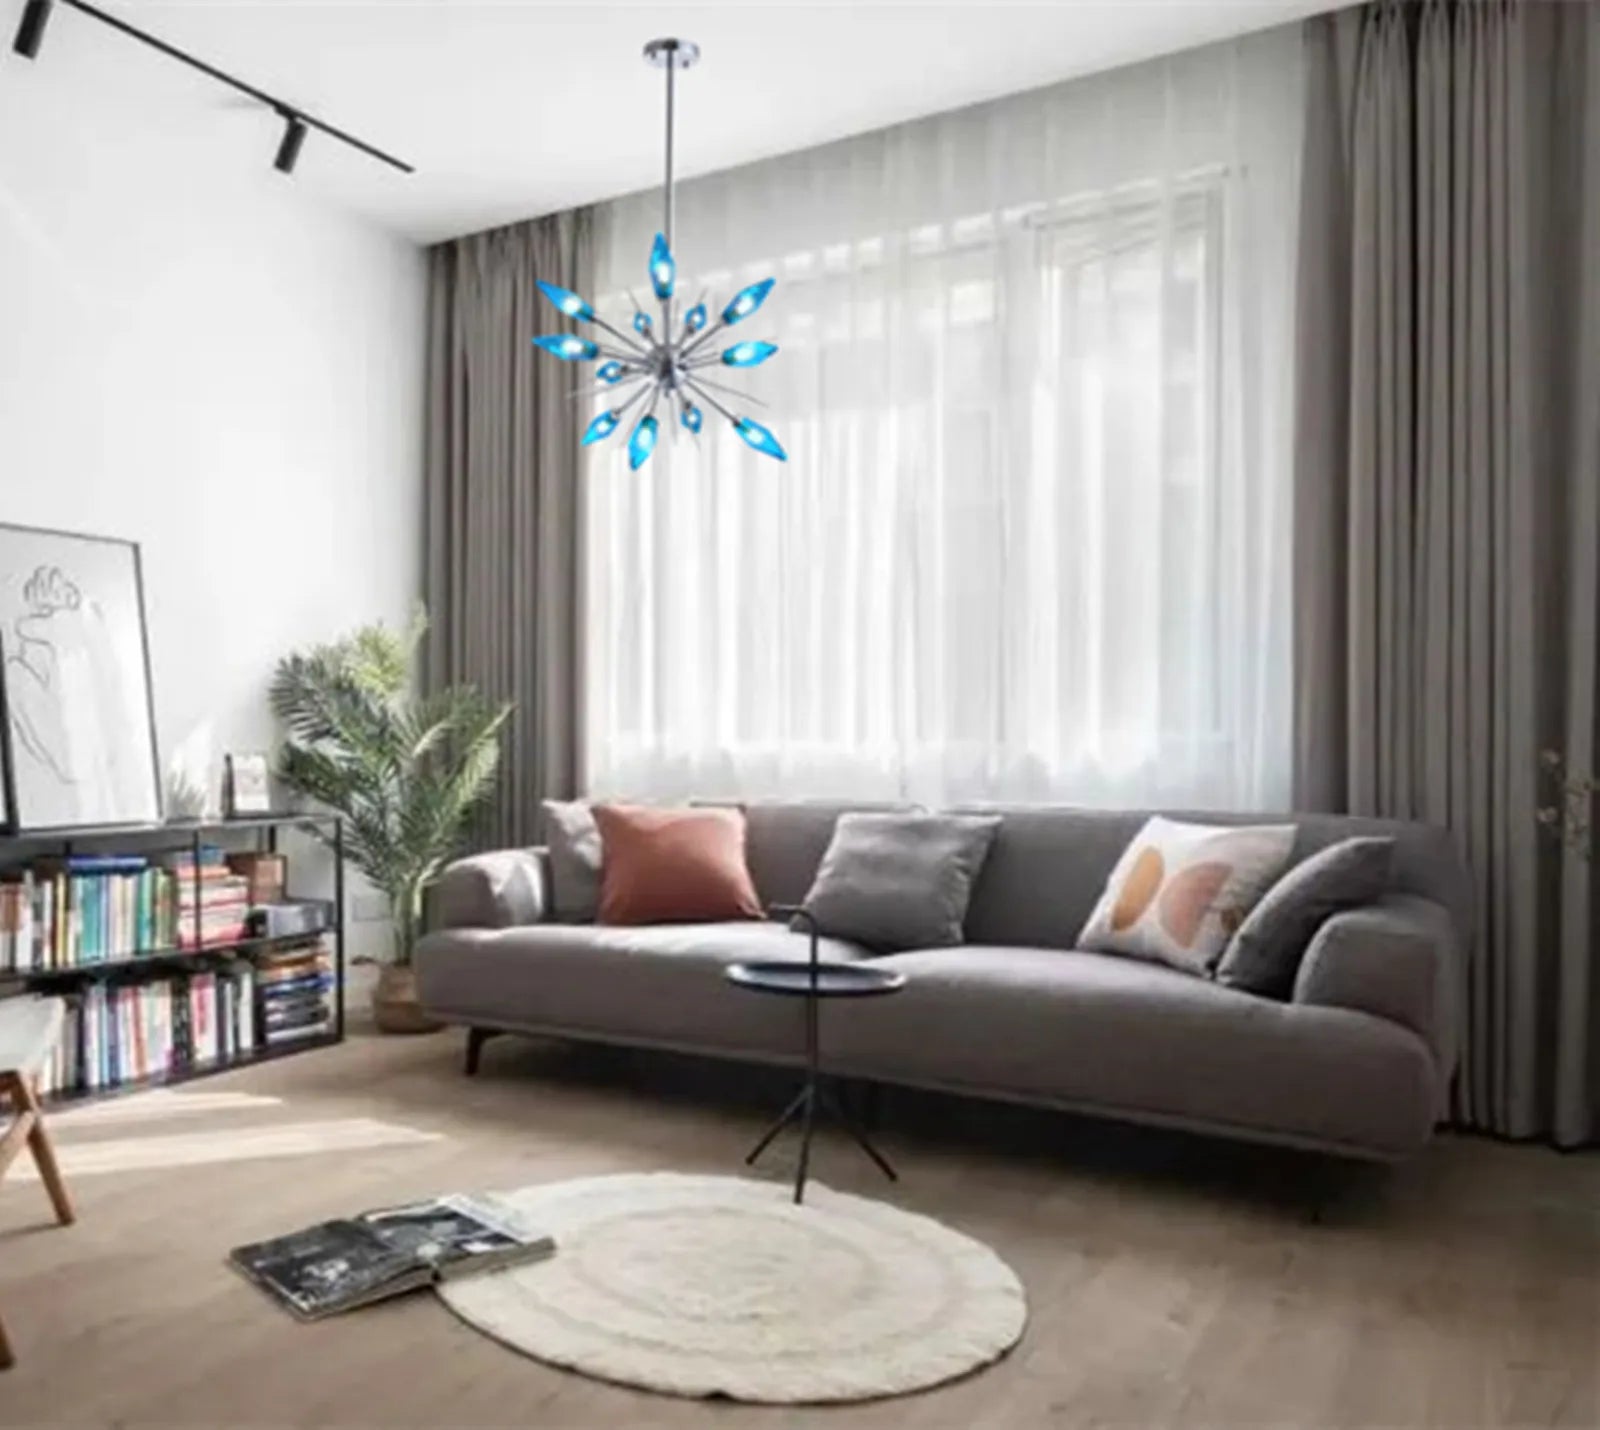 Blue Branch Chandeliers Modern Glass Ceiling Pendant Light Fixture for